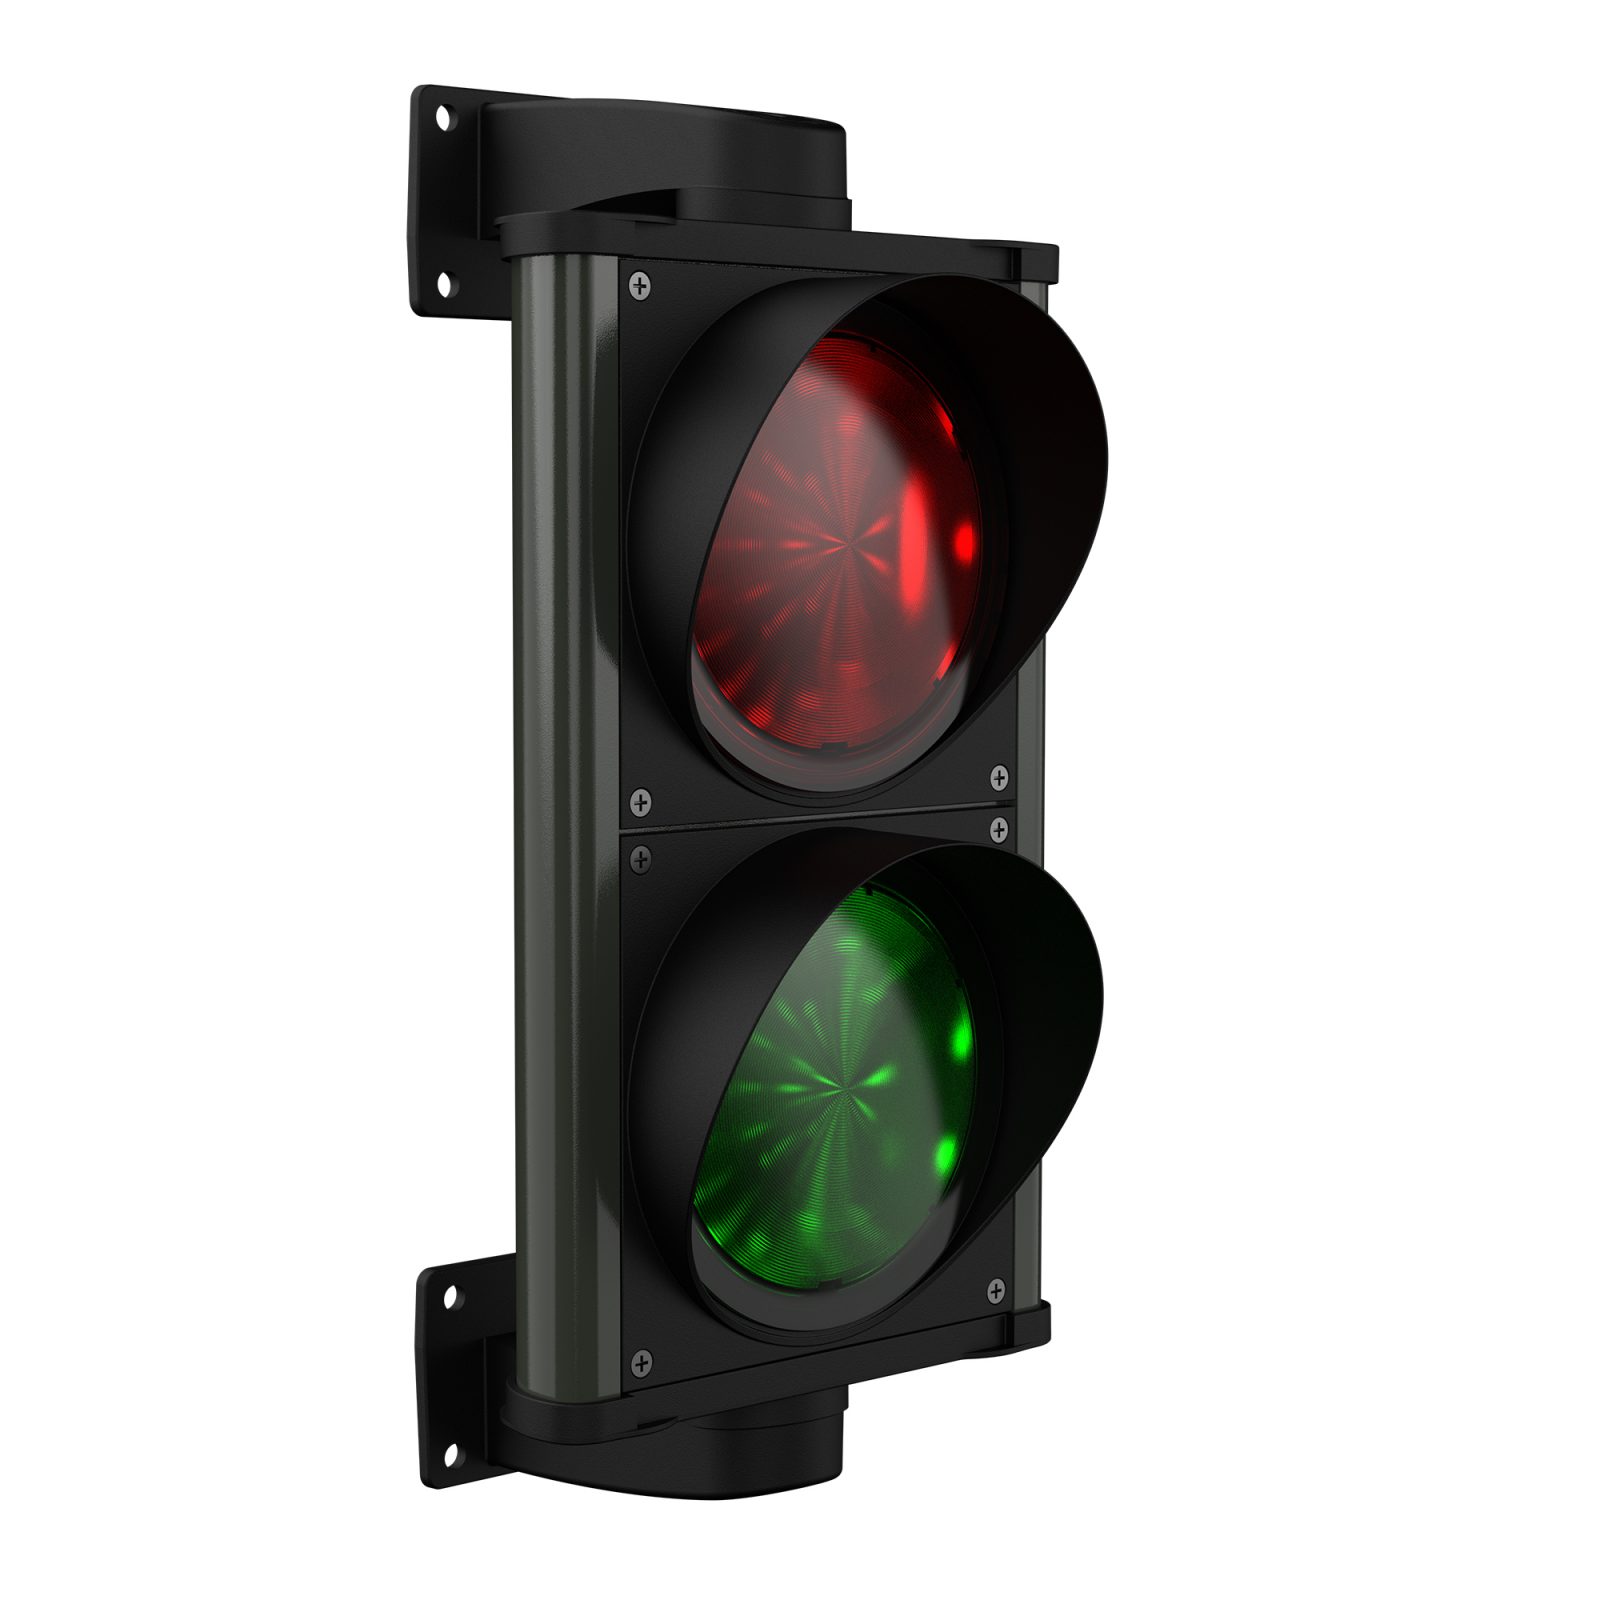 Chronos industrial traffic light systems